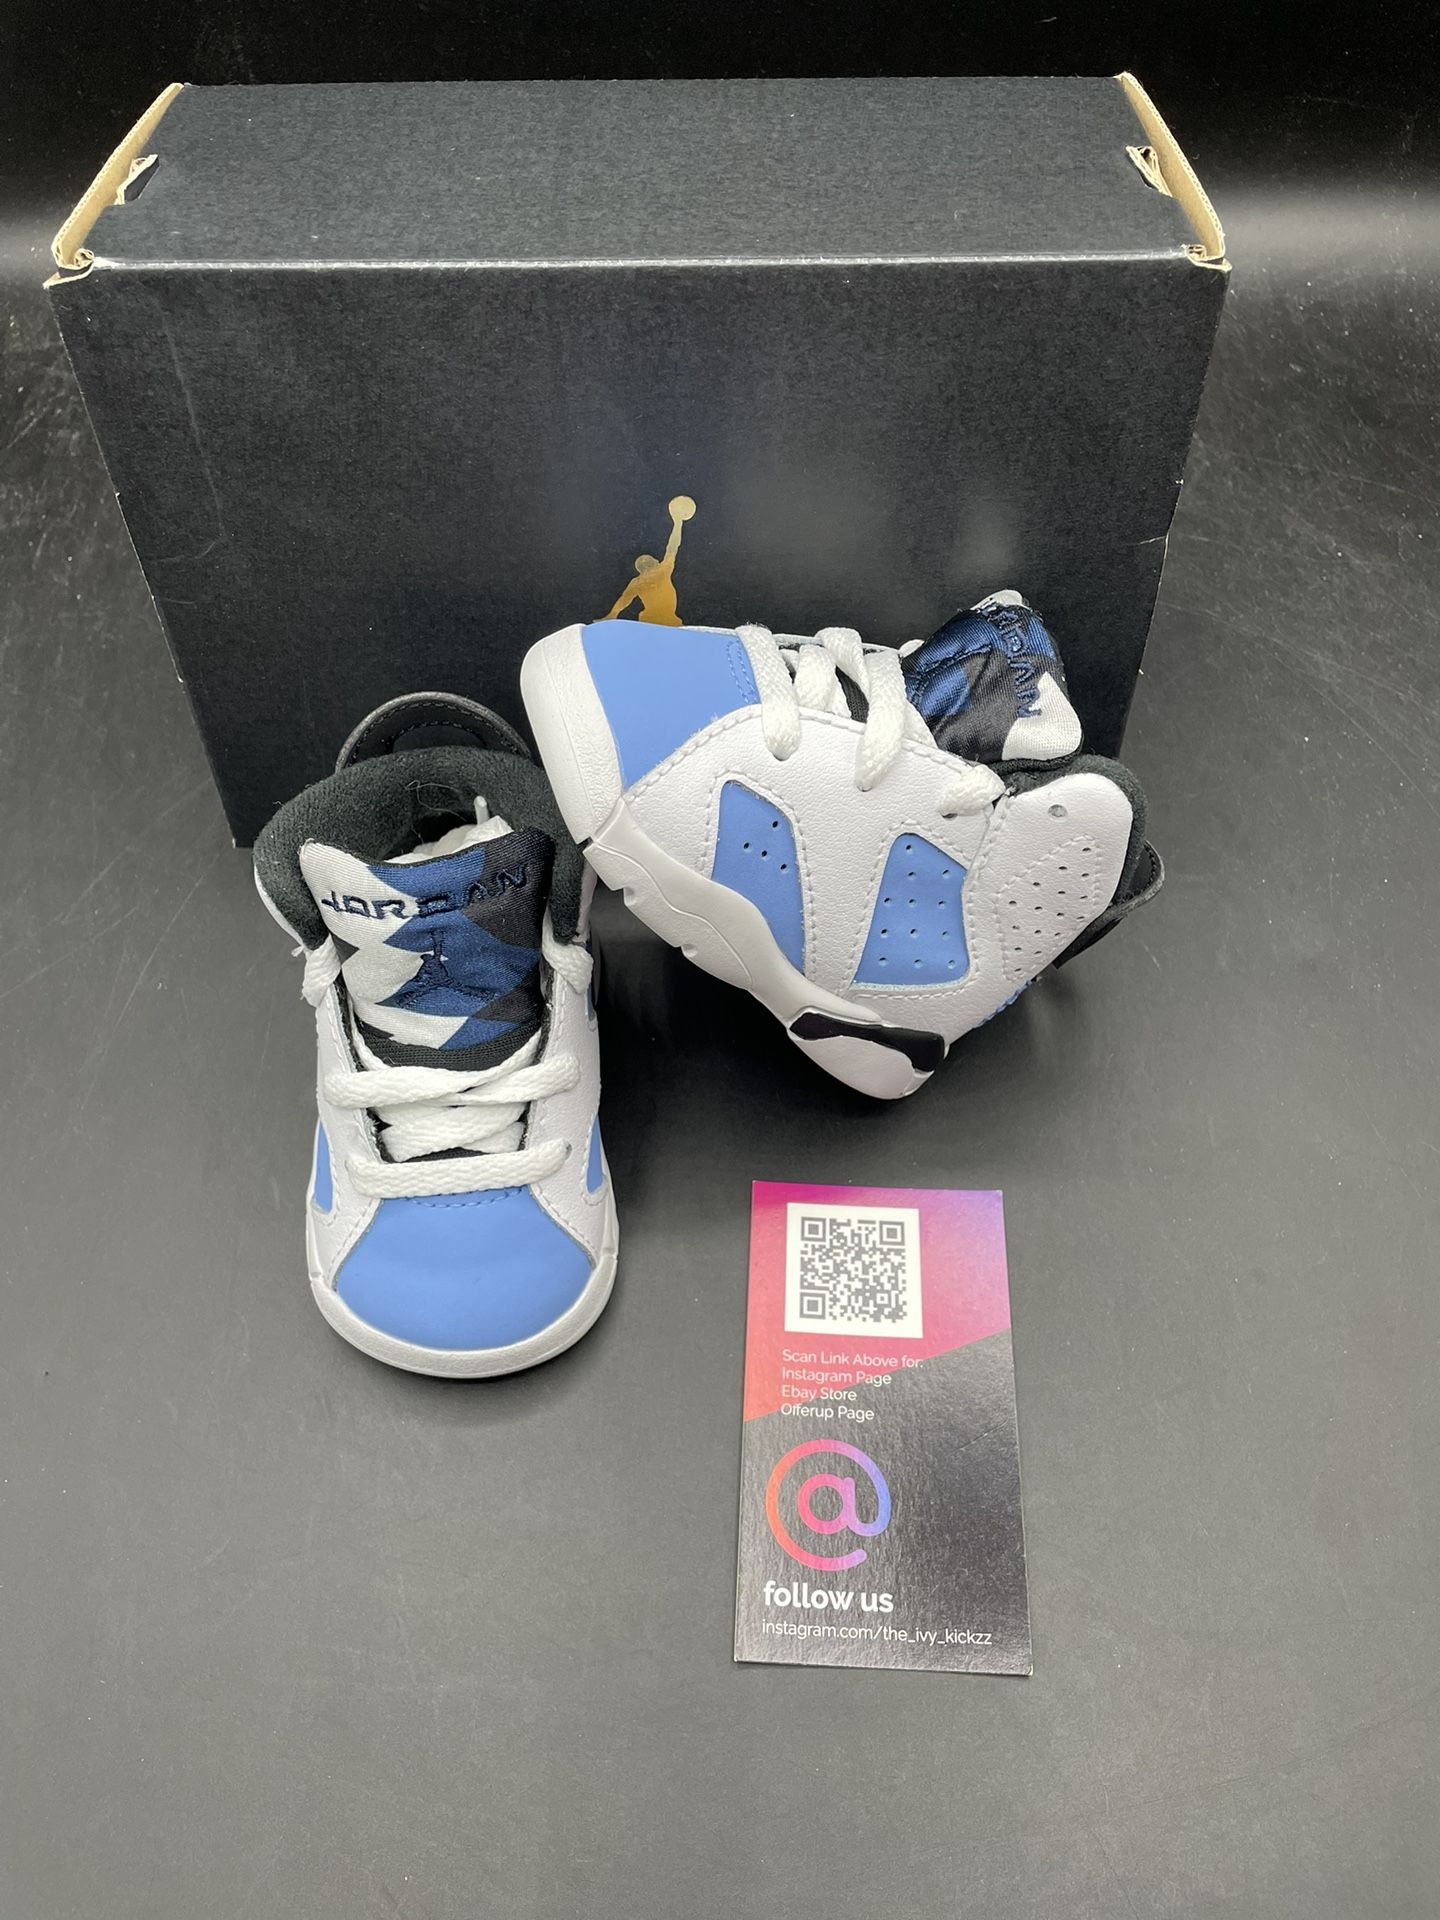 New Nike Air Jordan 6 Retro Size 2c Baby University Blue UNC Toddler TD Shoes